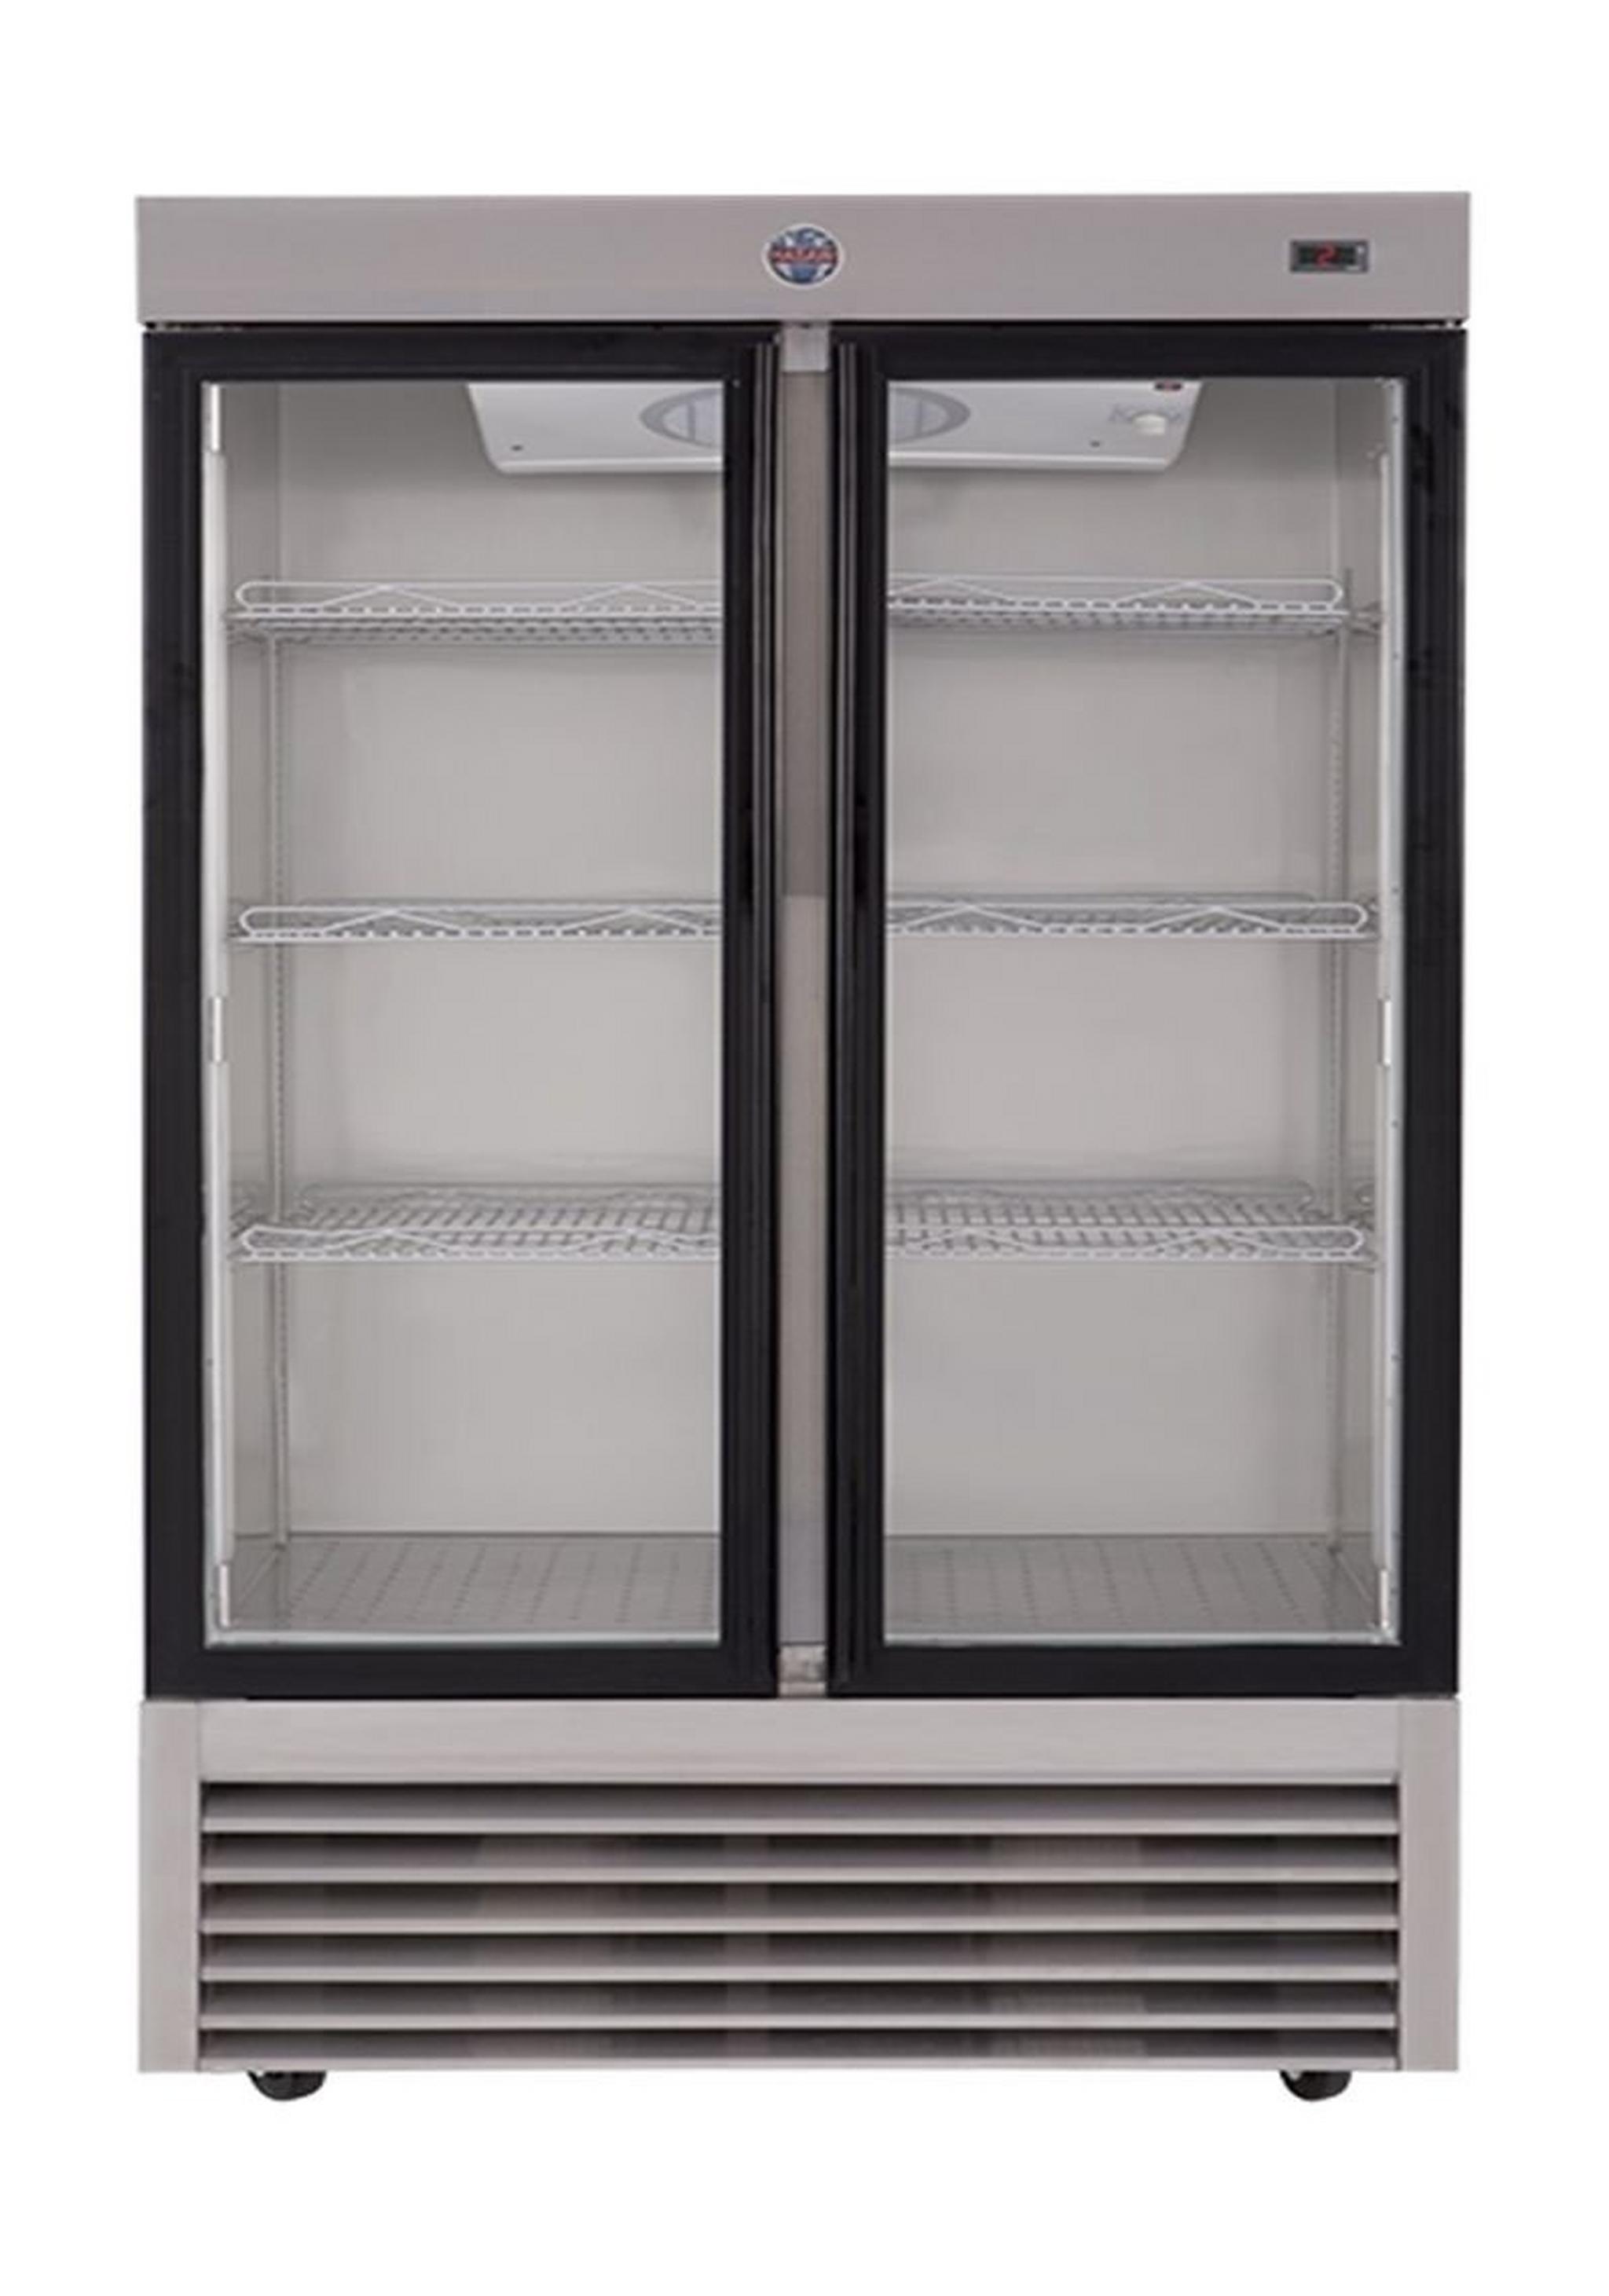 Wansa Window Refrigetor, 34CFT, 950-Liters, 2GDAS - Stainless Steel